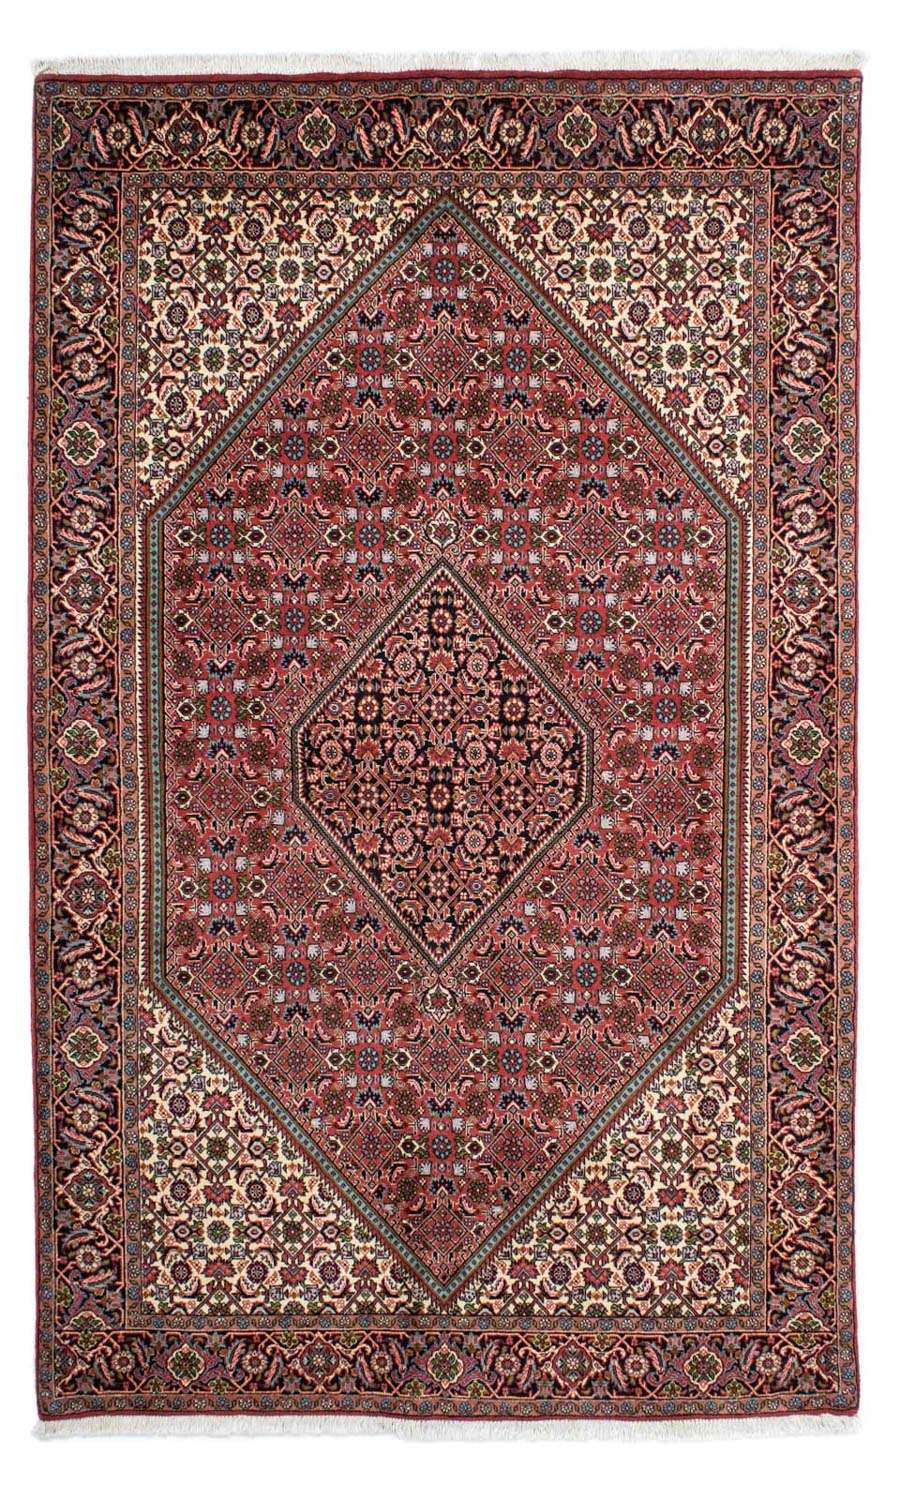 Tapis persan - Bidjar - 233 x 140 cm - rouge